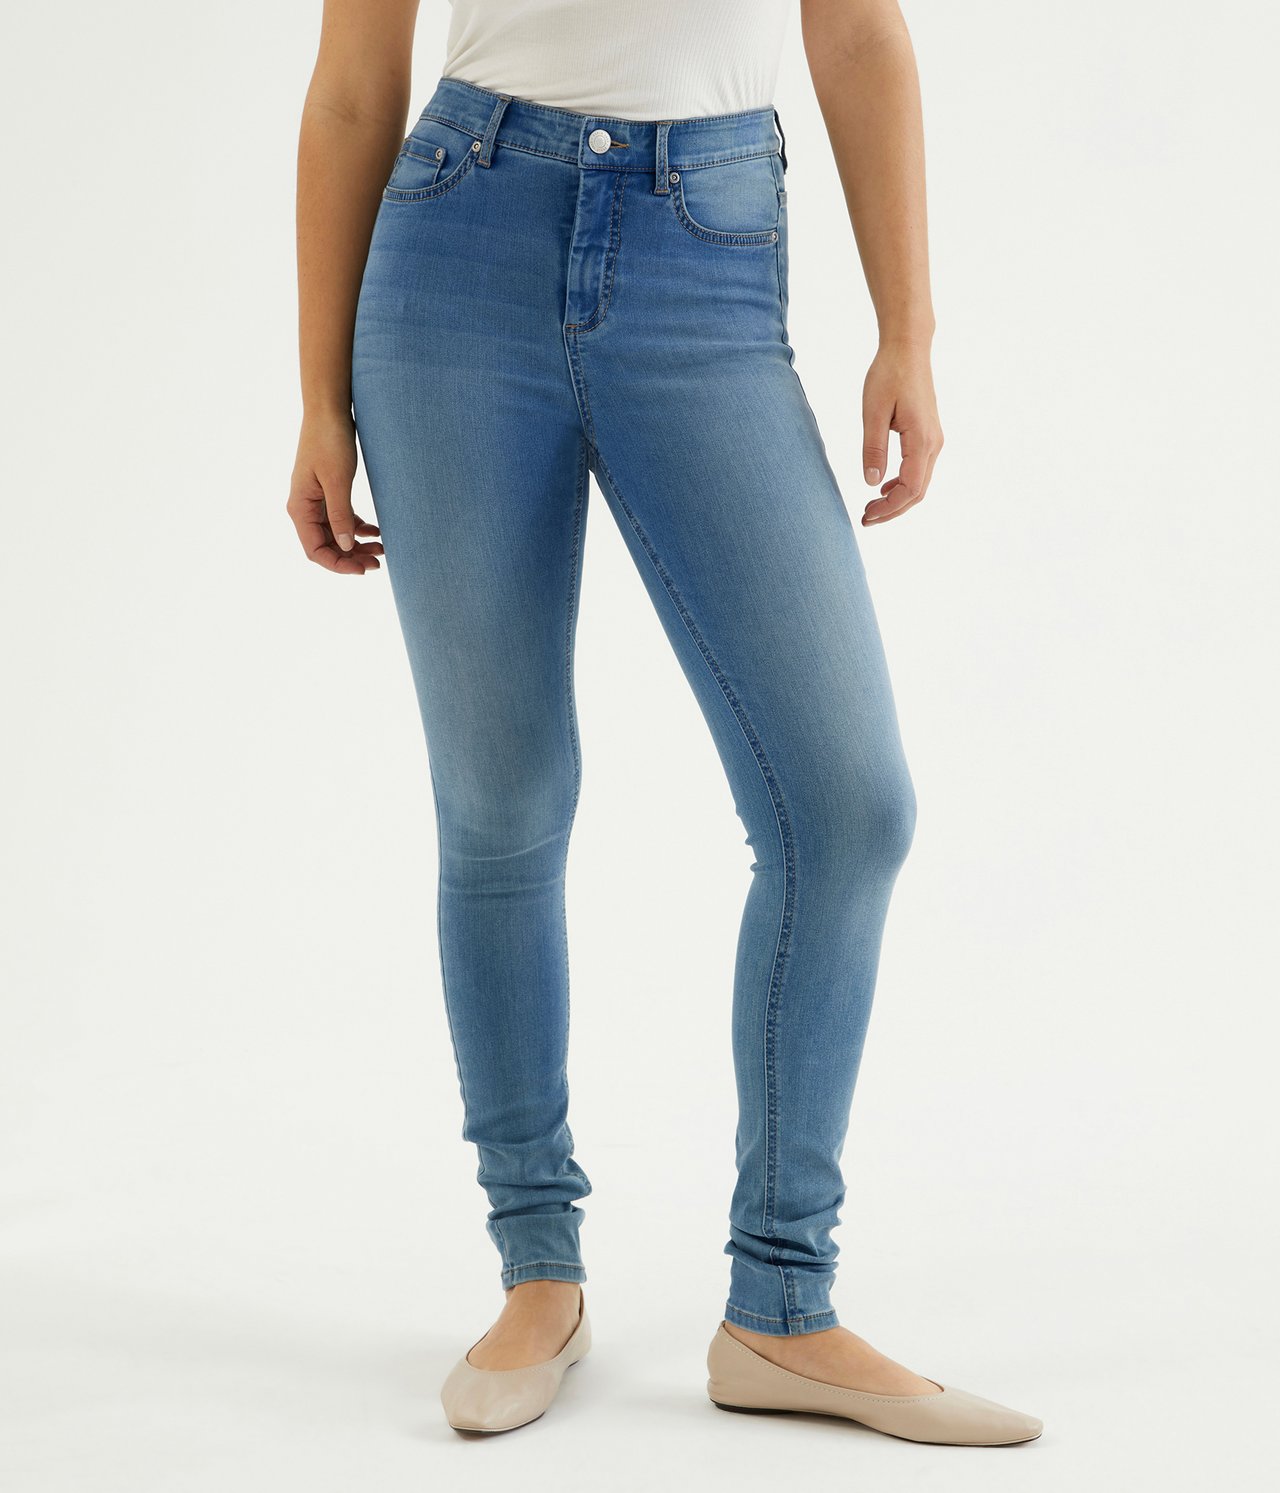 Super slim jeans extra long leg - Denimi - 3